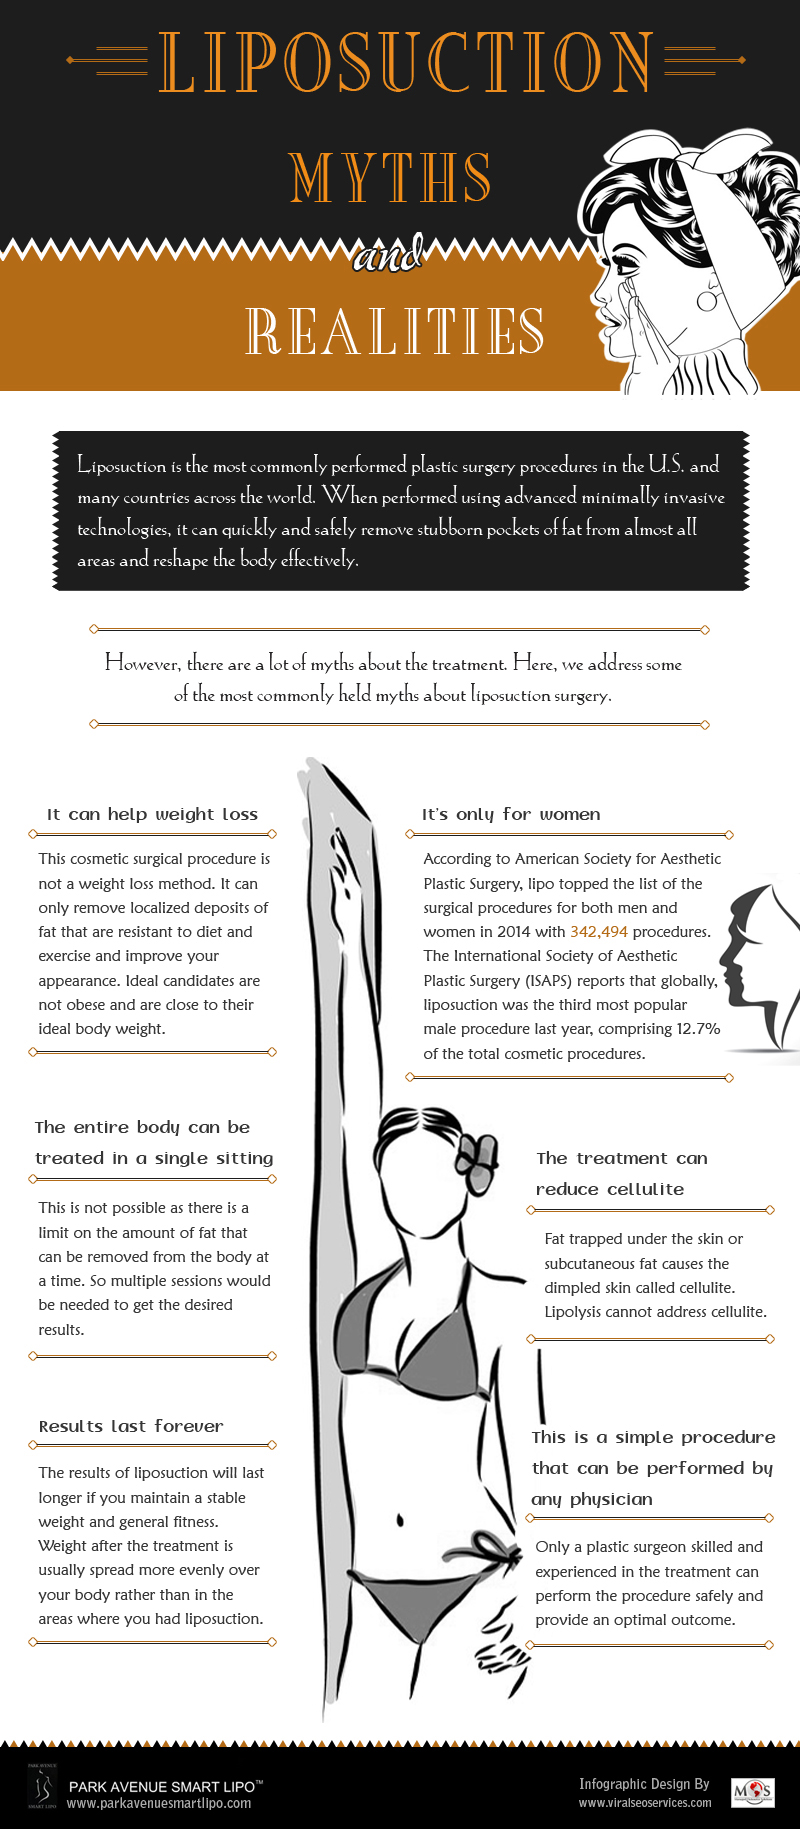 Liposuction Myths and Realities